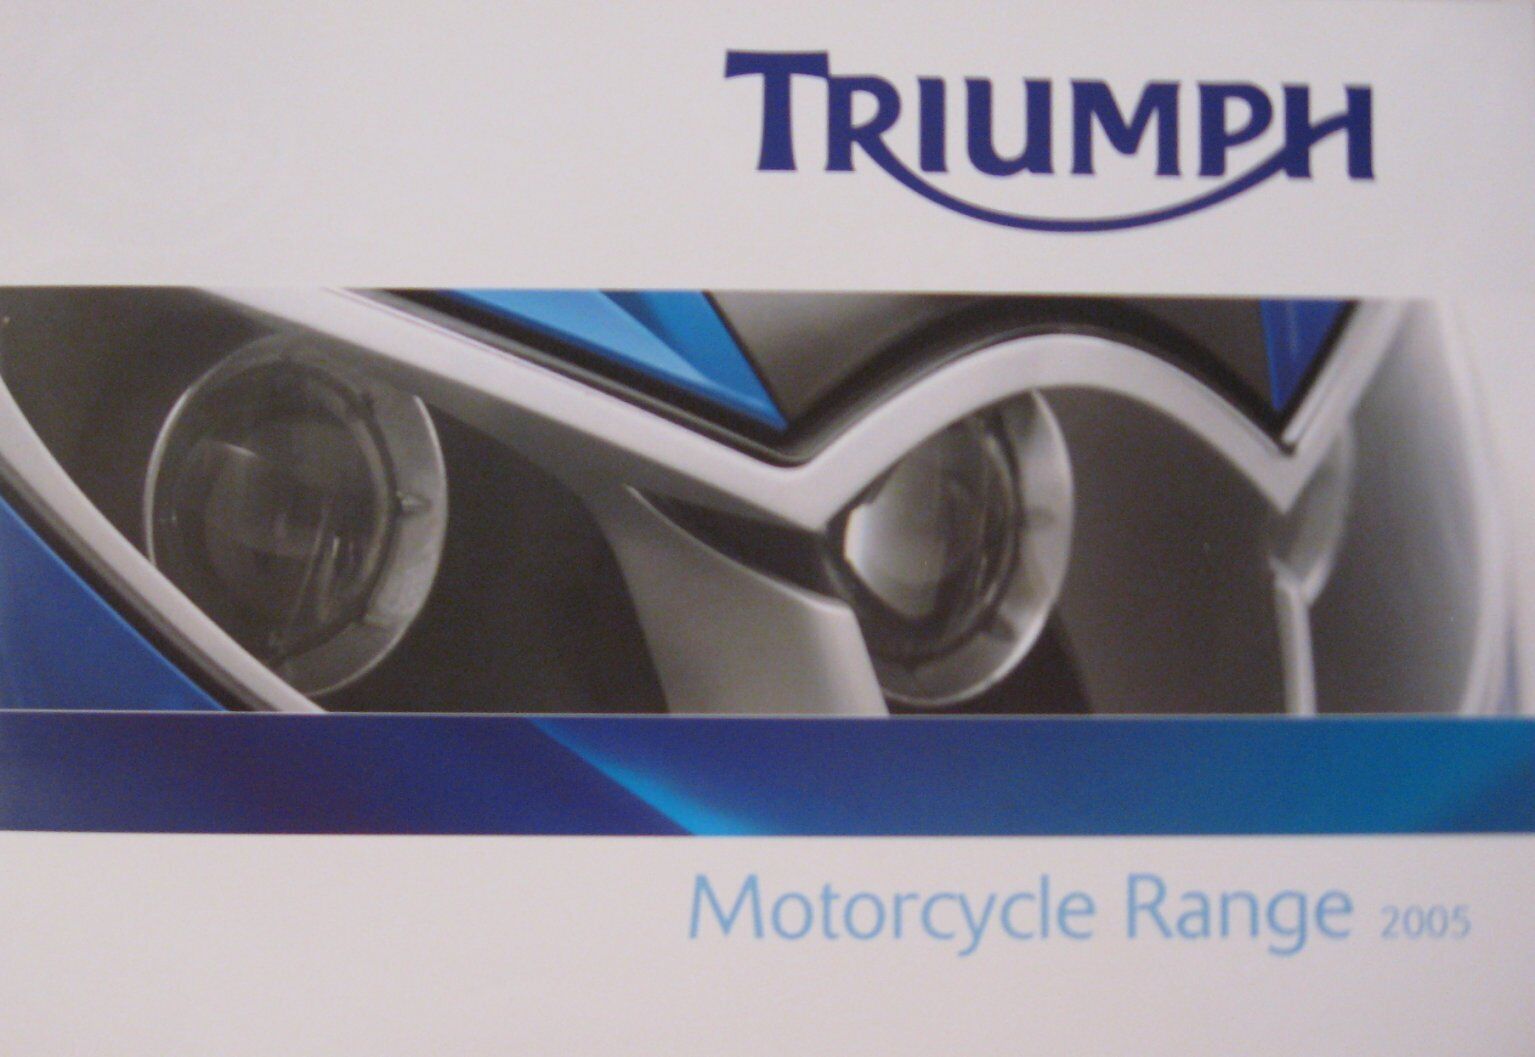 2005 Triumph Motorcycle Full Line Brochure, Original 16 pgs